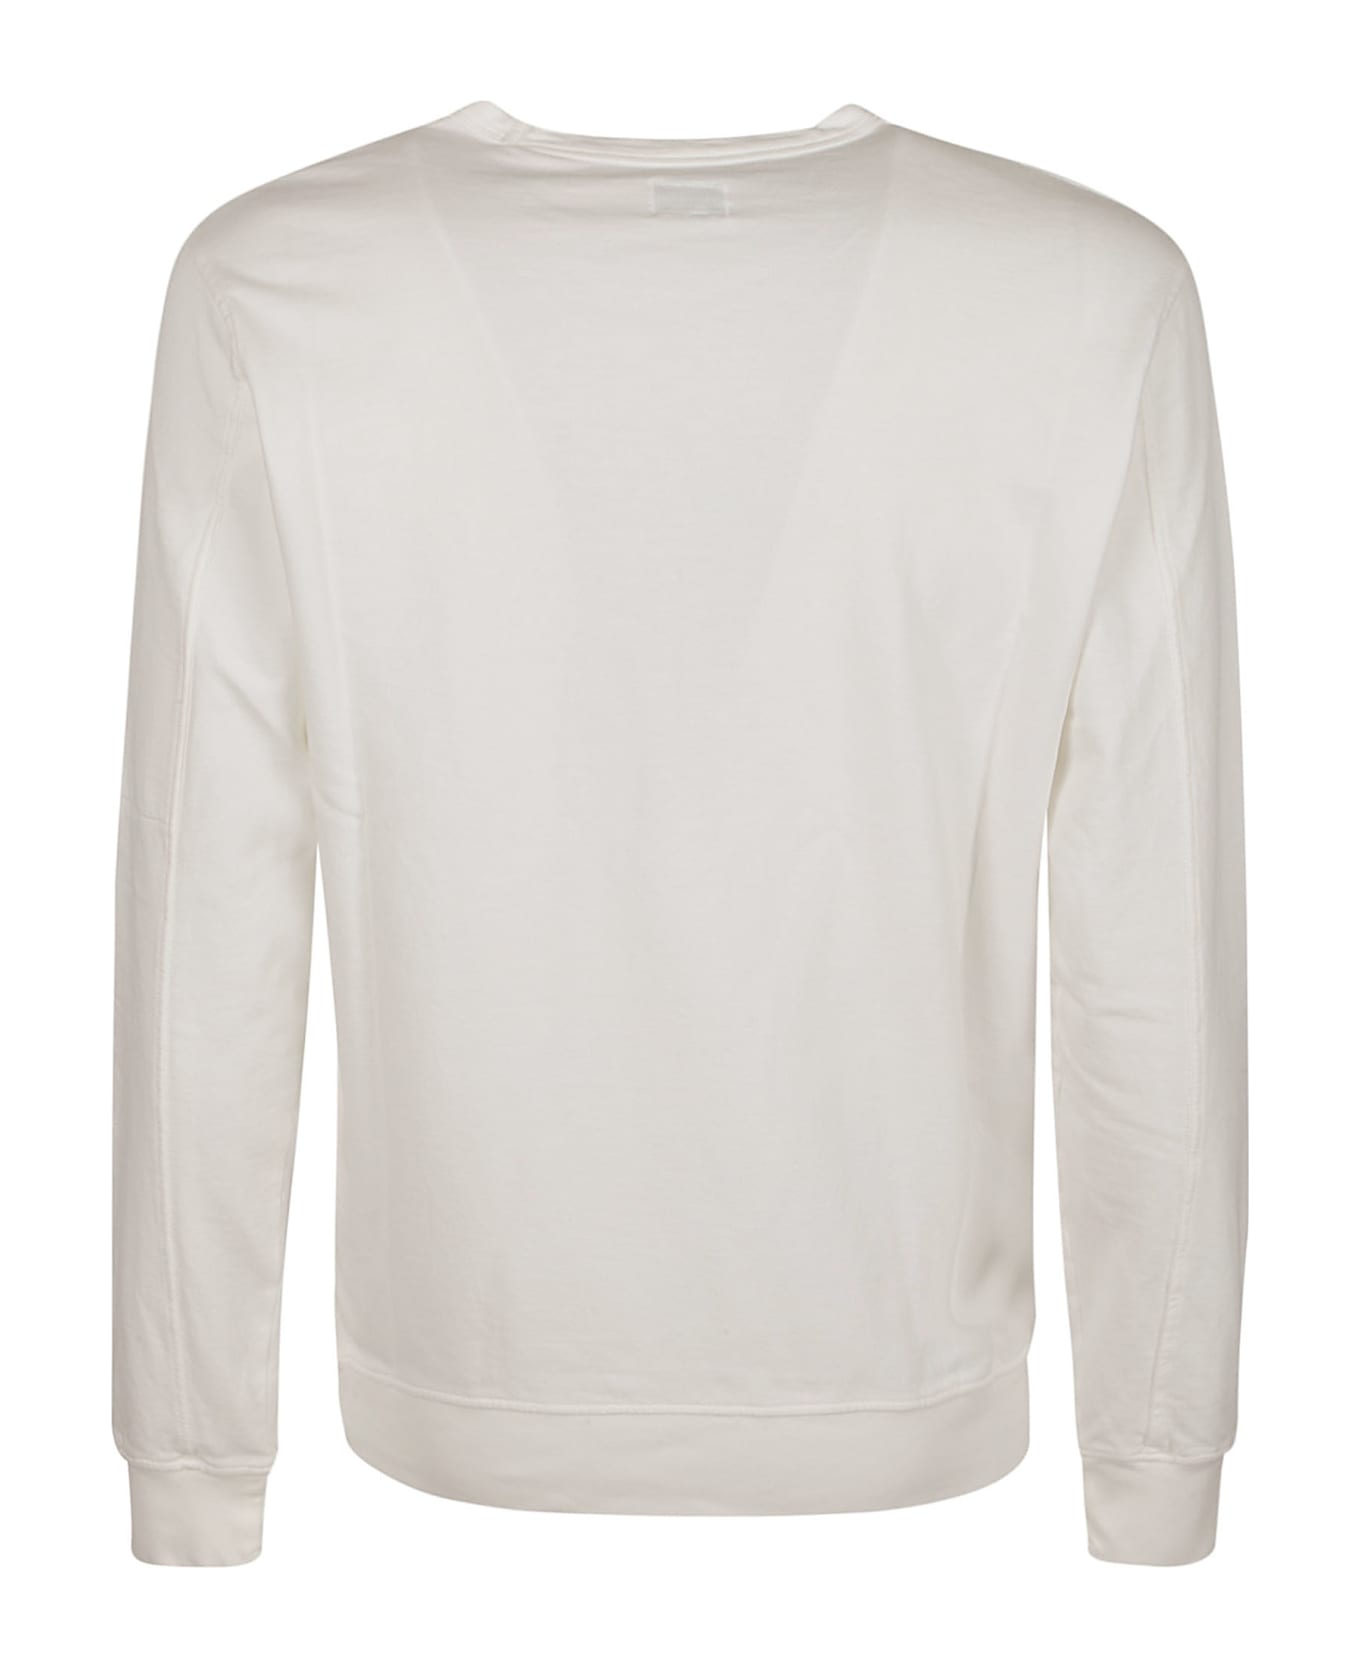 C.P. Company Light Fleece Sweatshirt - Gauze White フリース